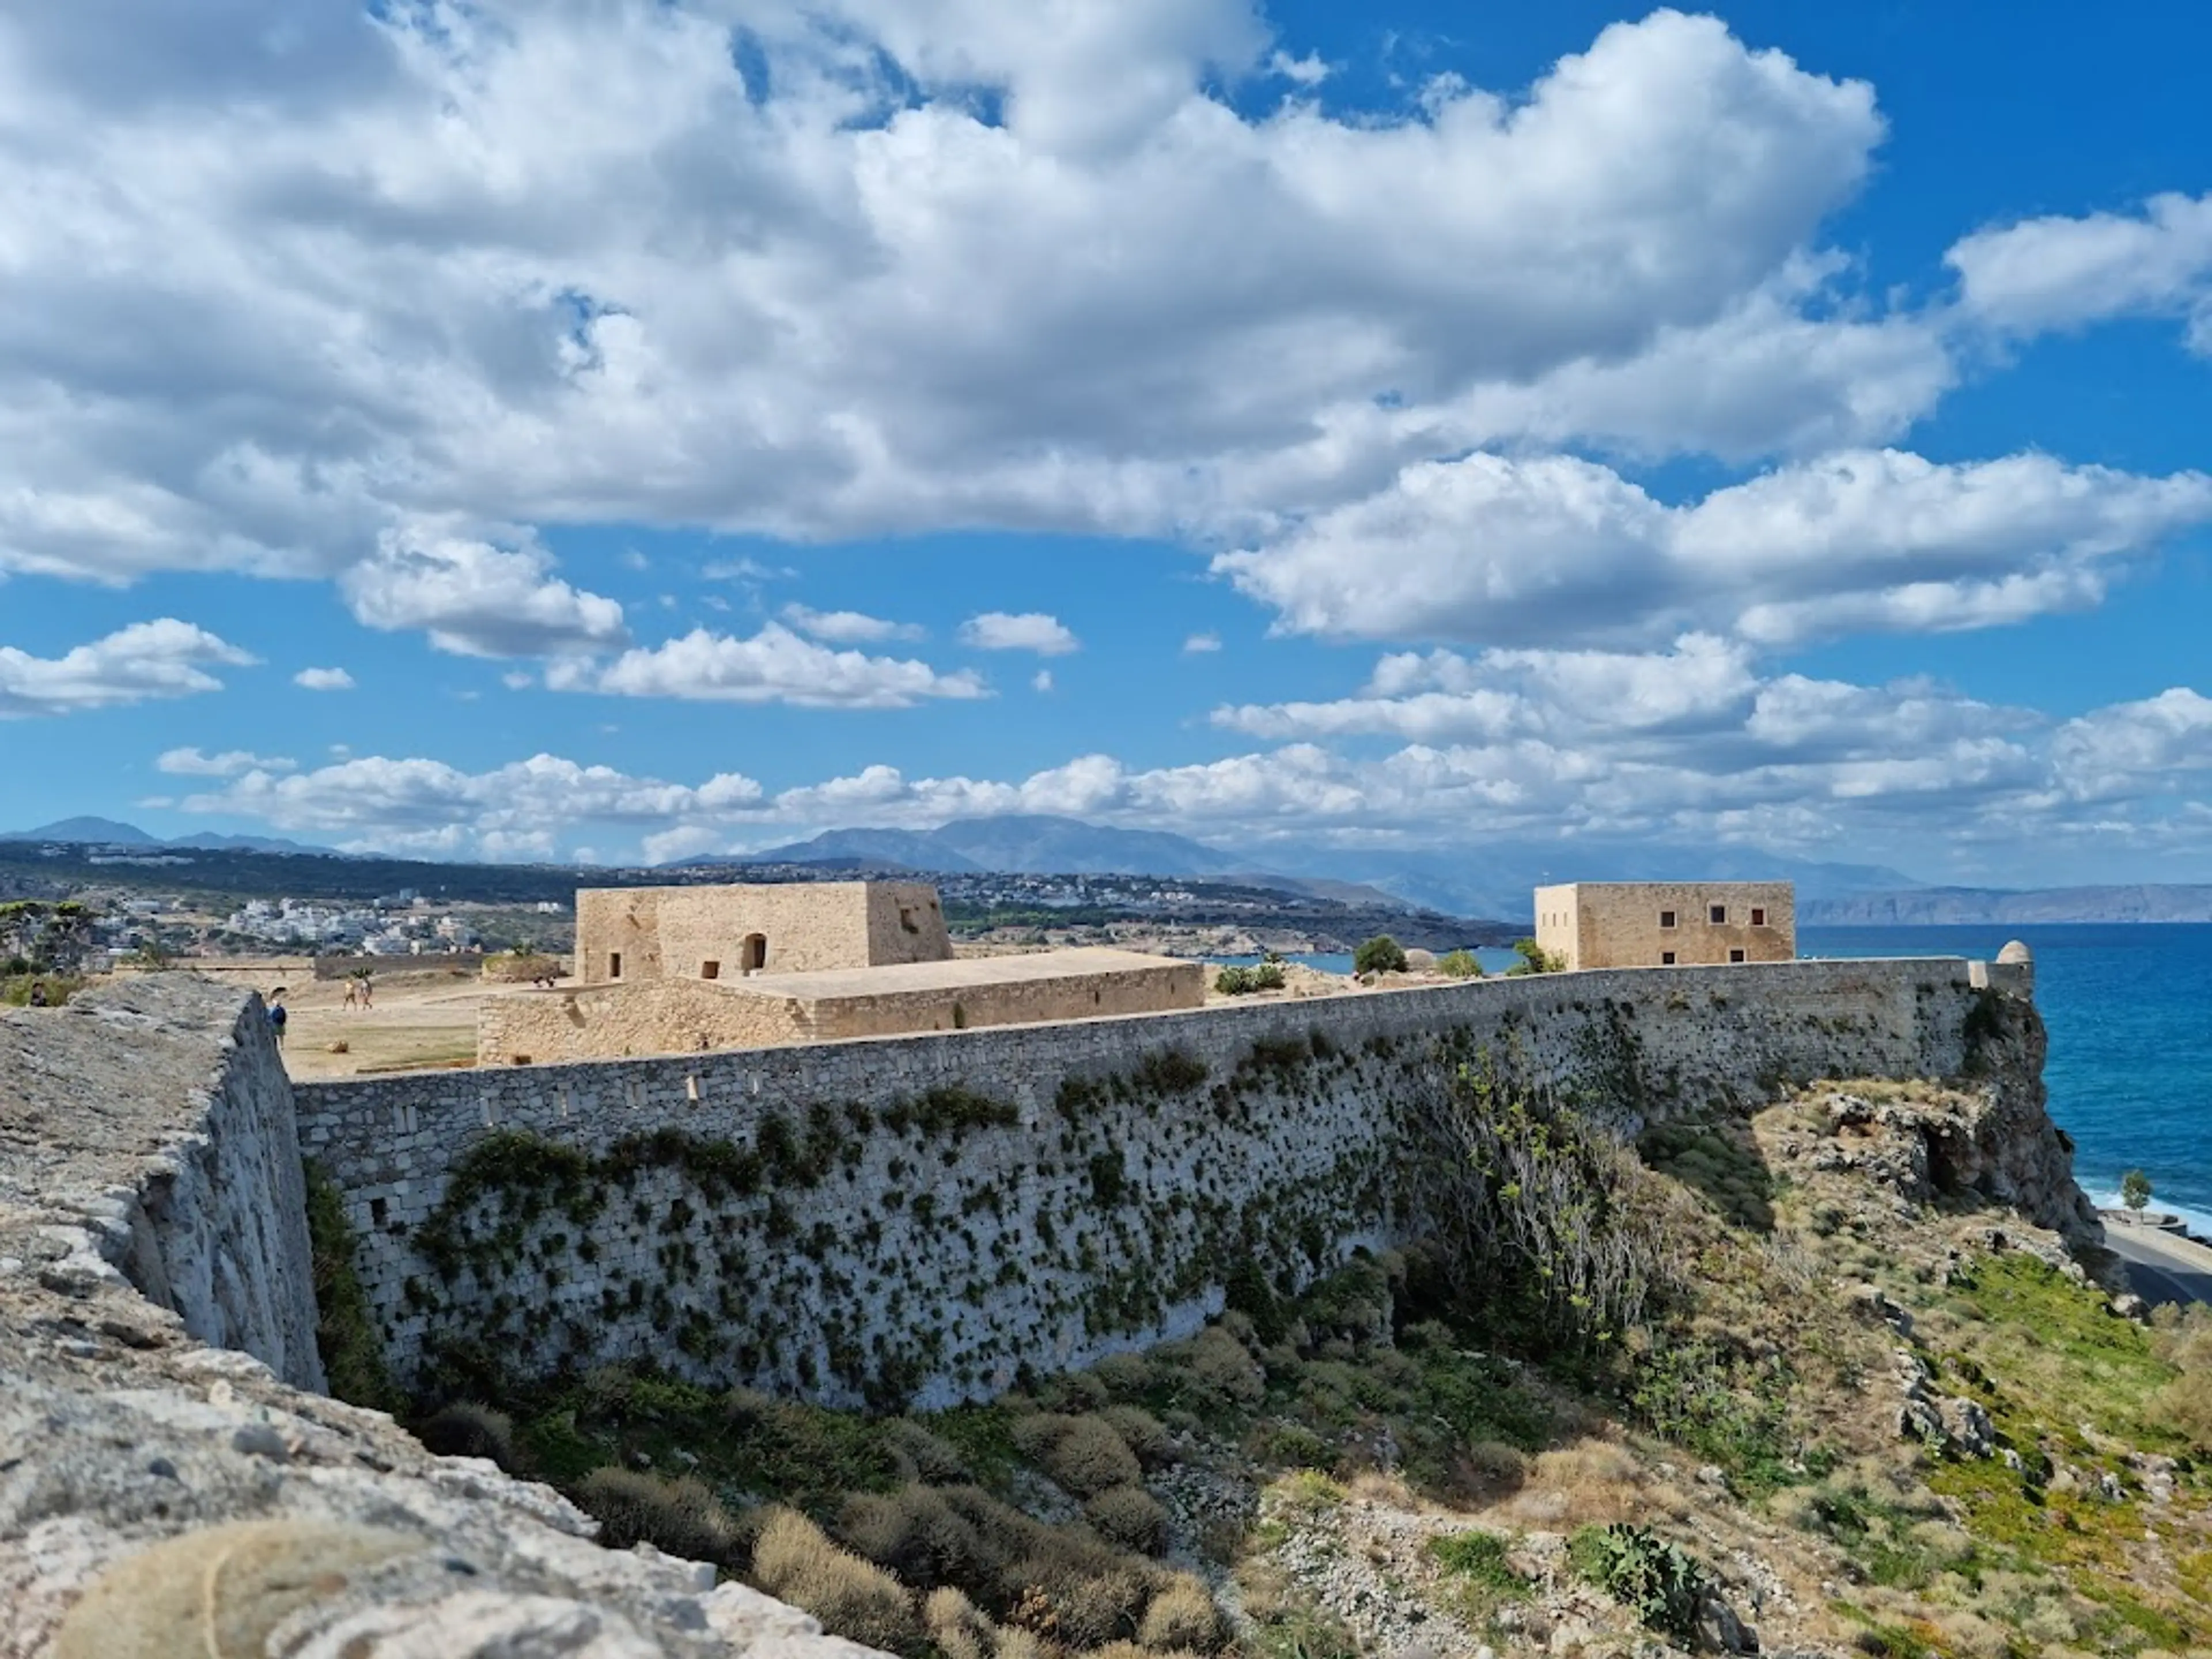 Venetian fortress of Rethymno